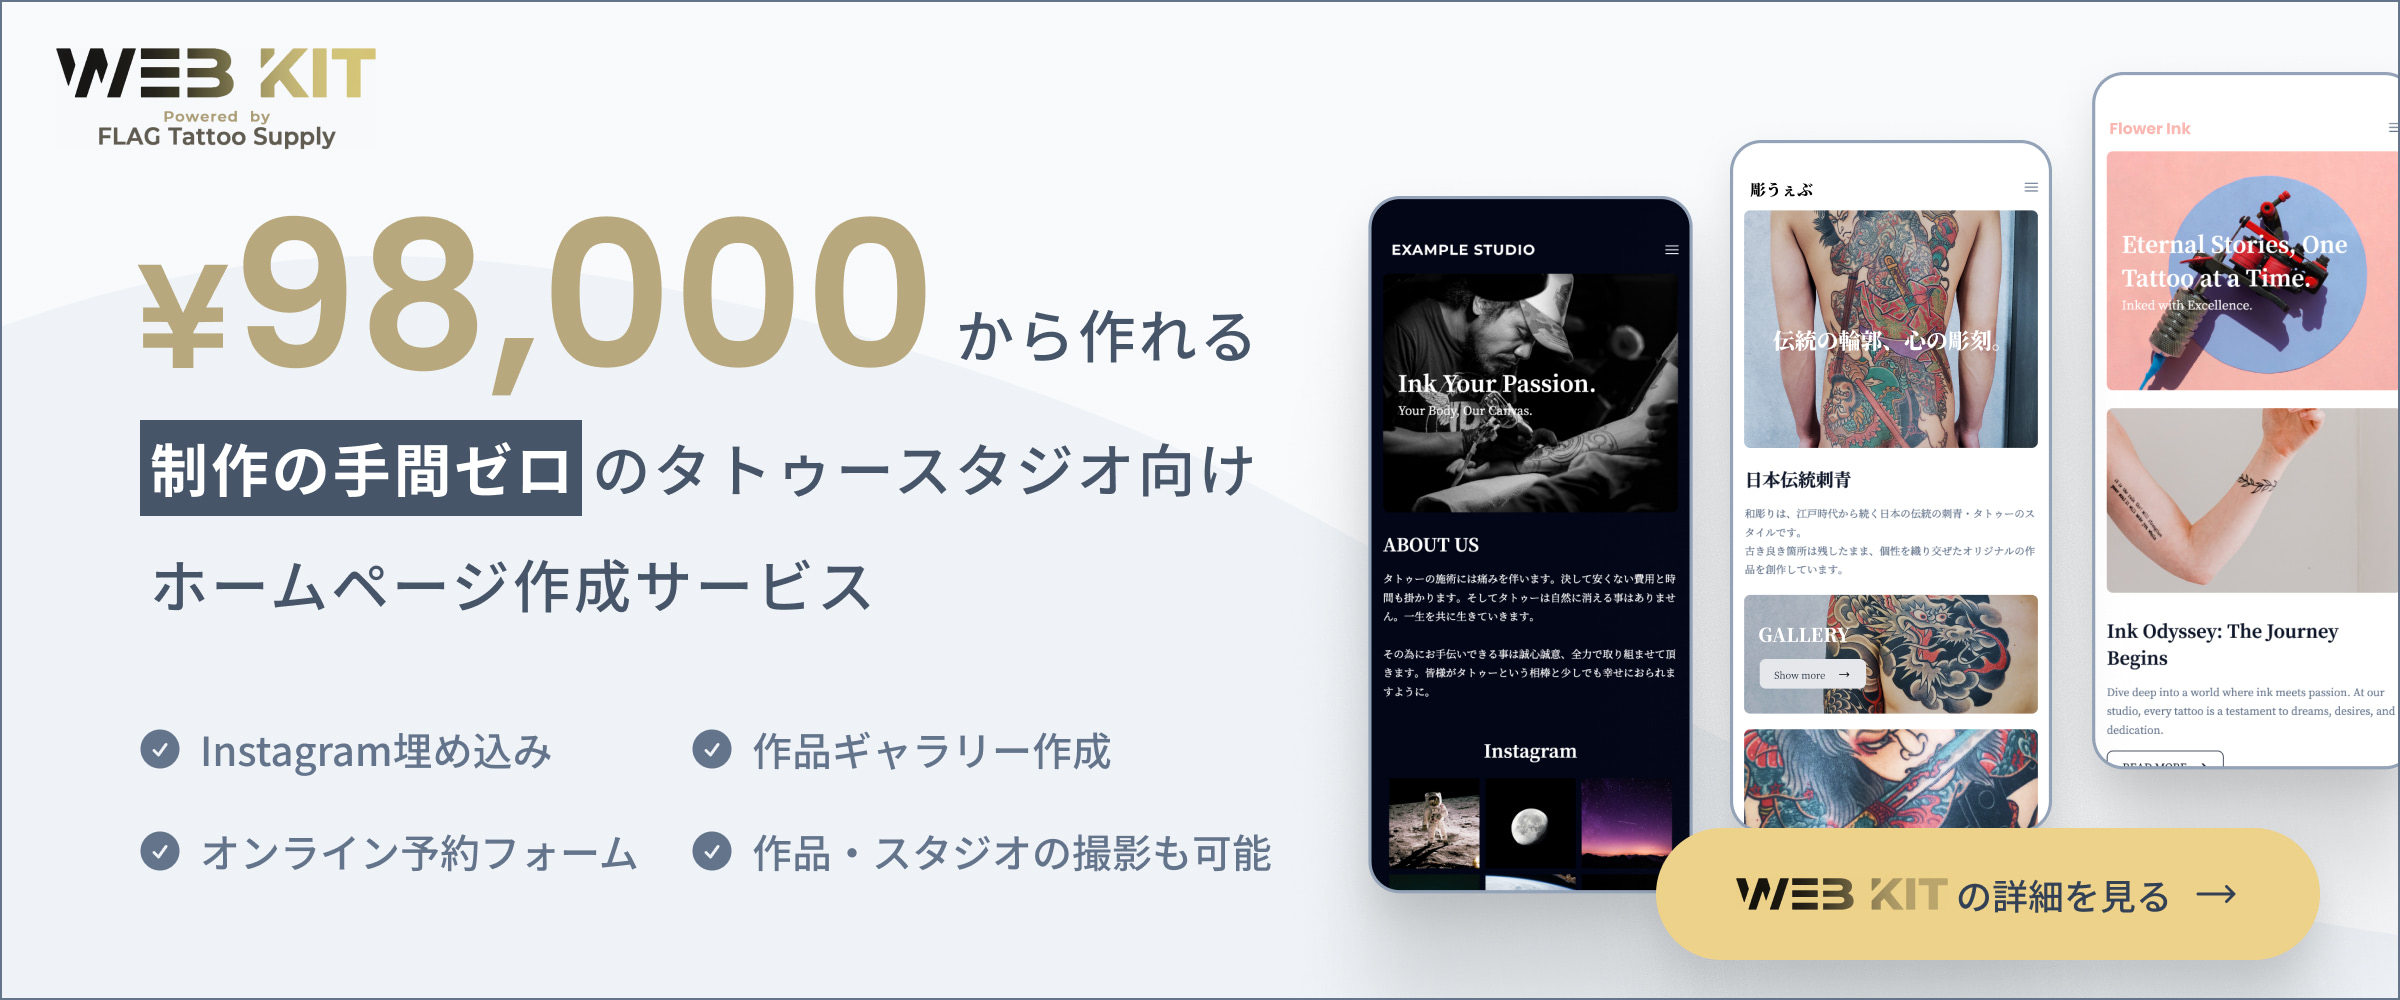 WEBKIT Powered by FLAG TATTOO SUPPLY ¥98000から作れる制作の手間ゼロのタトゥースタジオ向けホームページ作成サービス